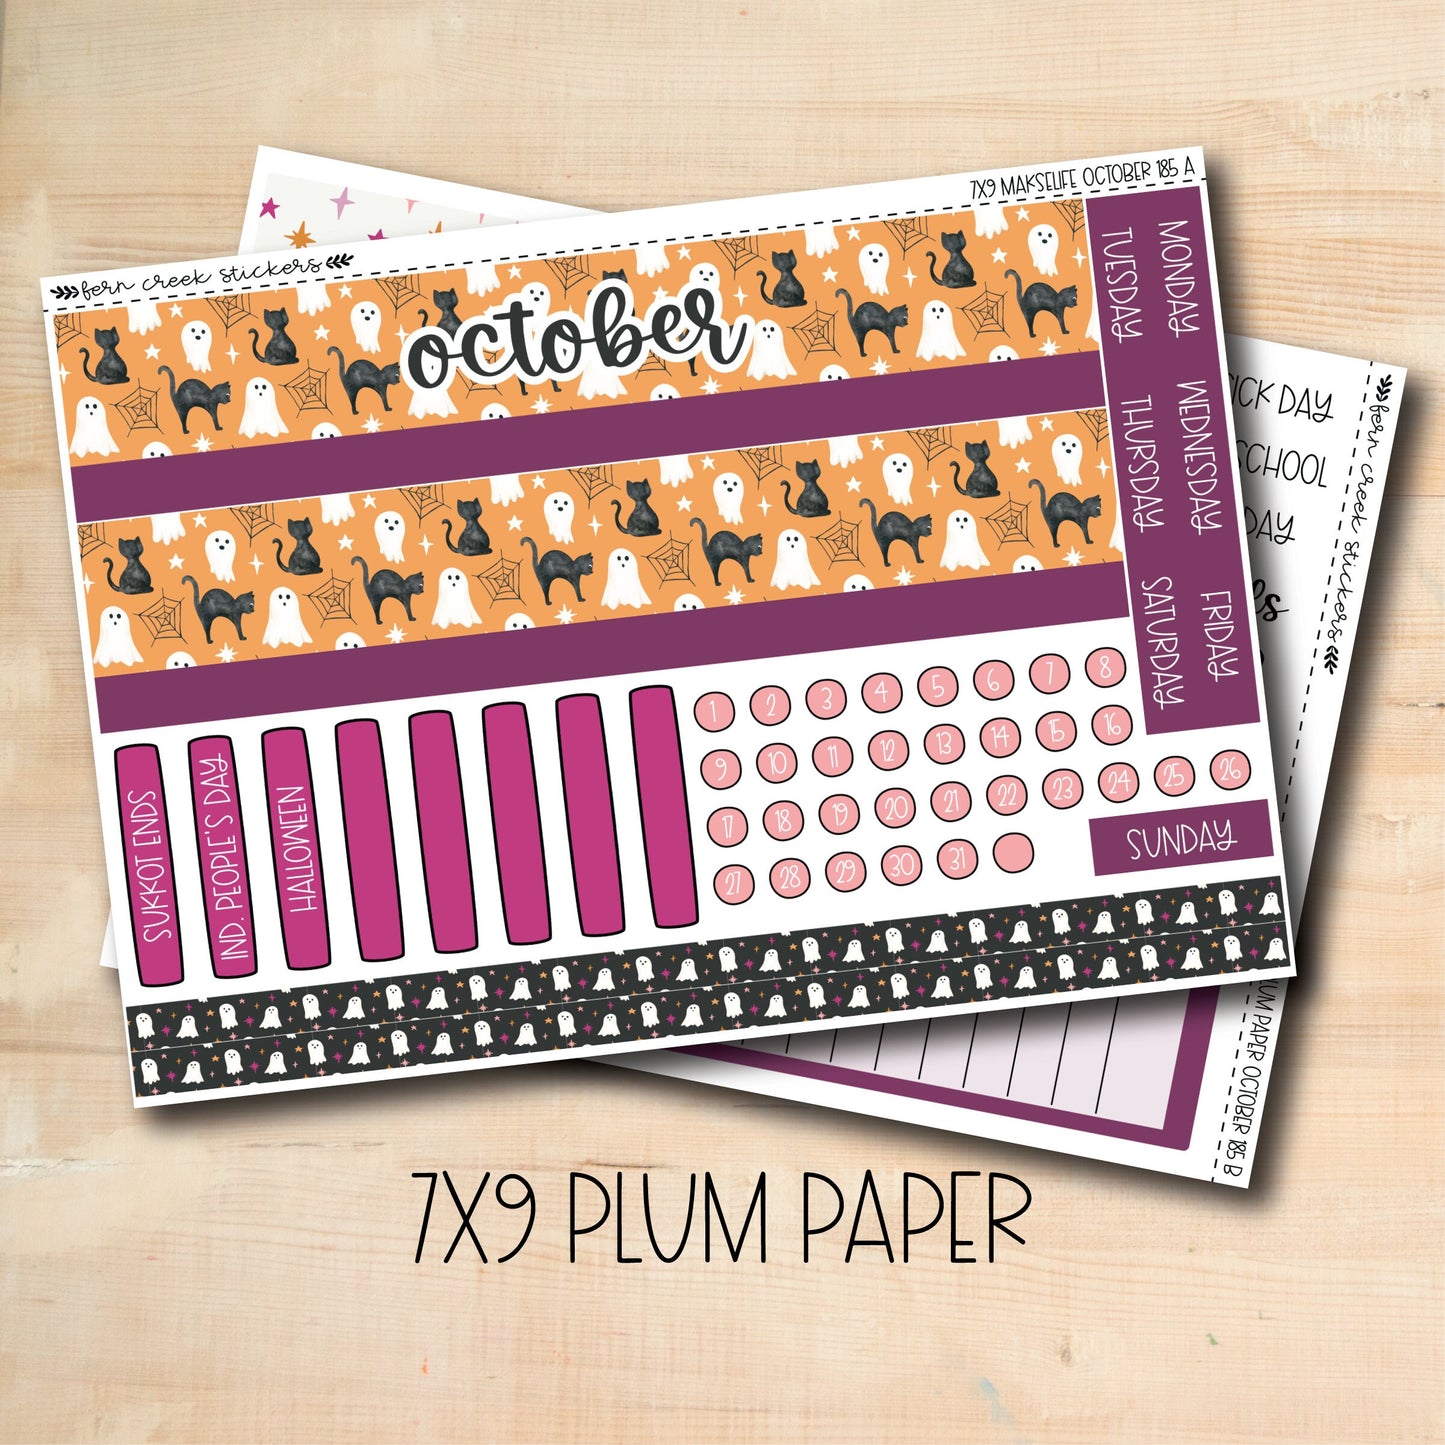 7x9 PLUM-185 || CUTE HALLOWEEN 7x9 Plum Paper October Monthly Kit